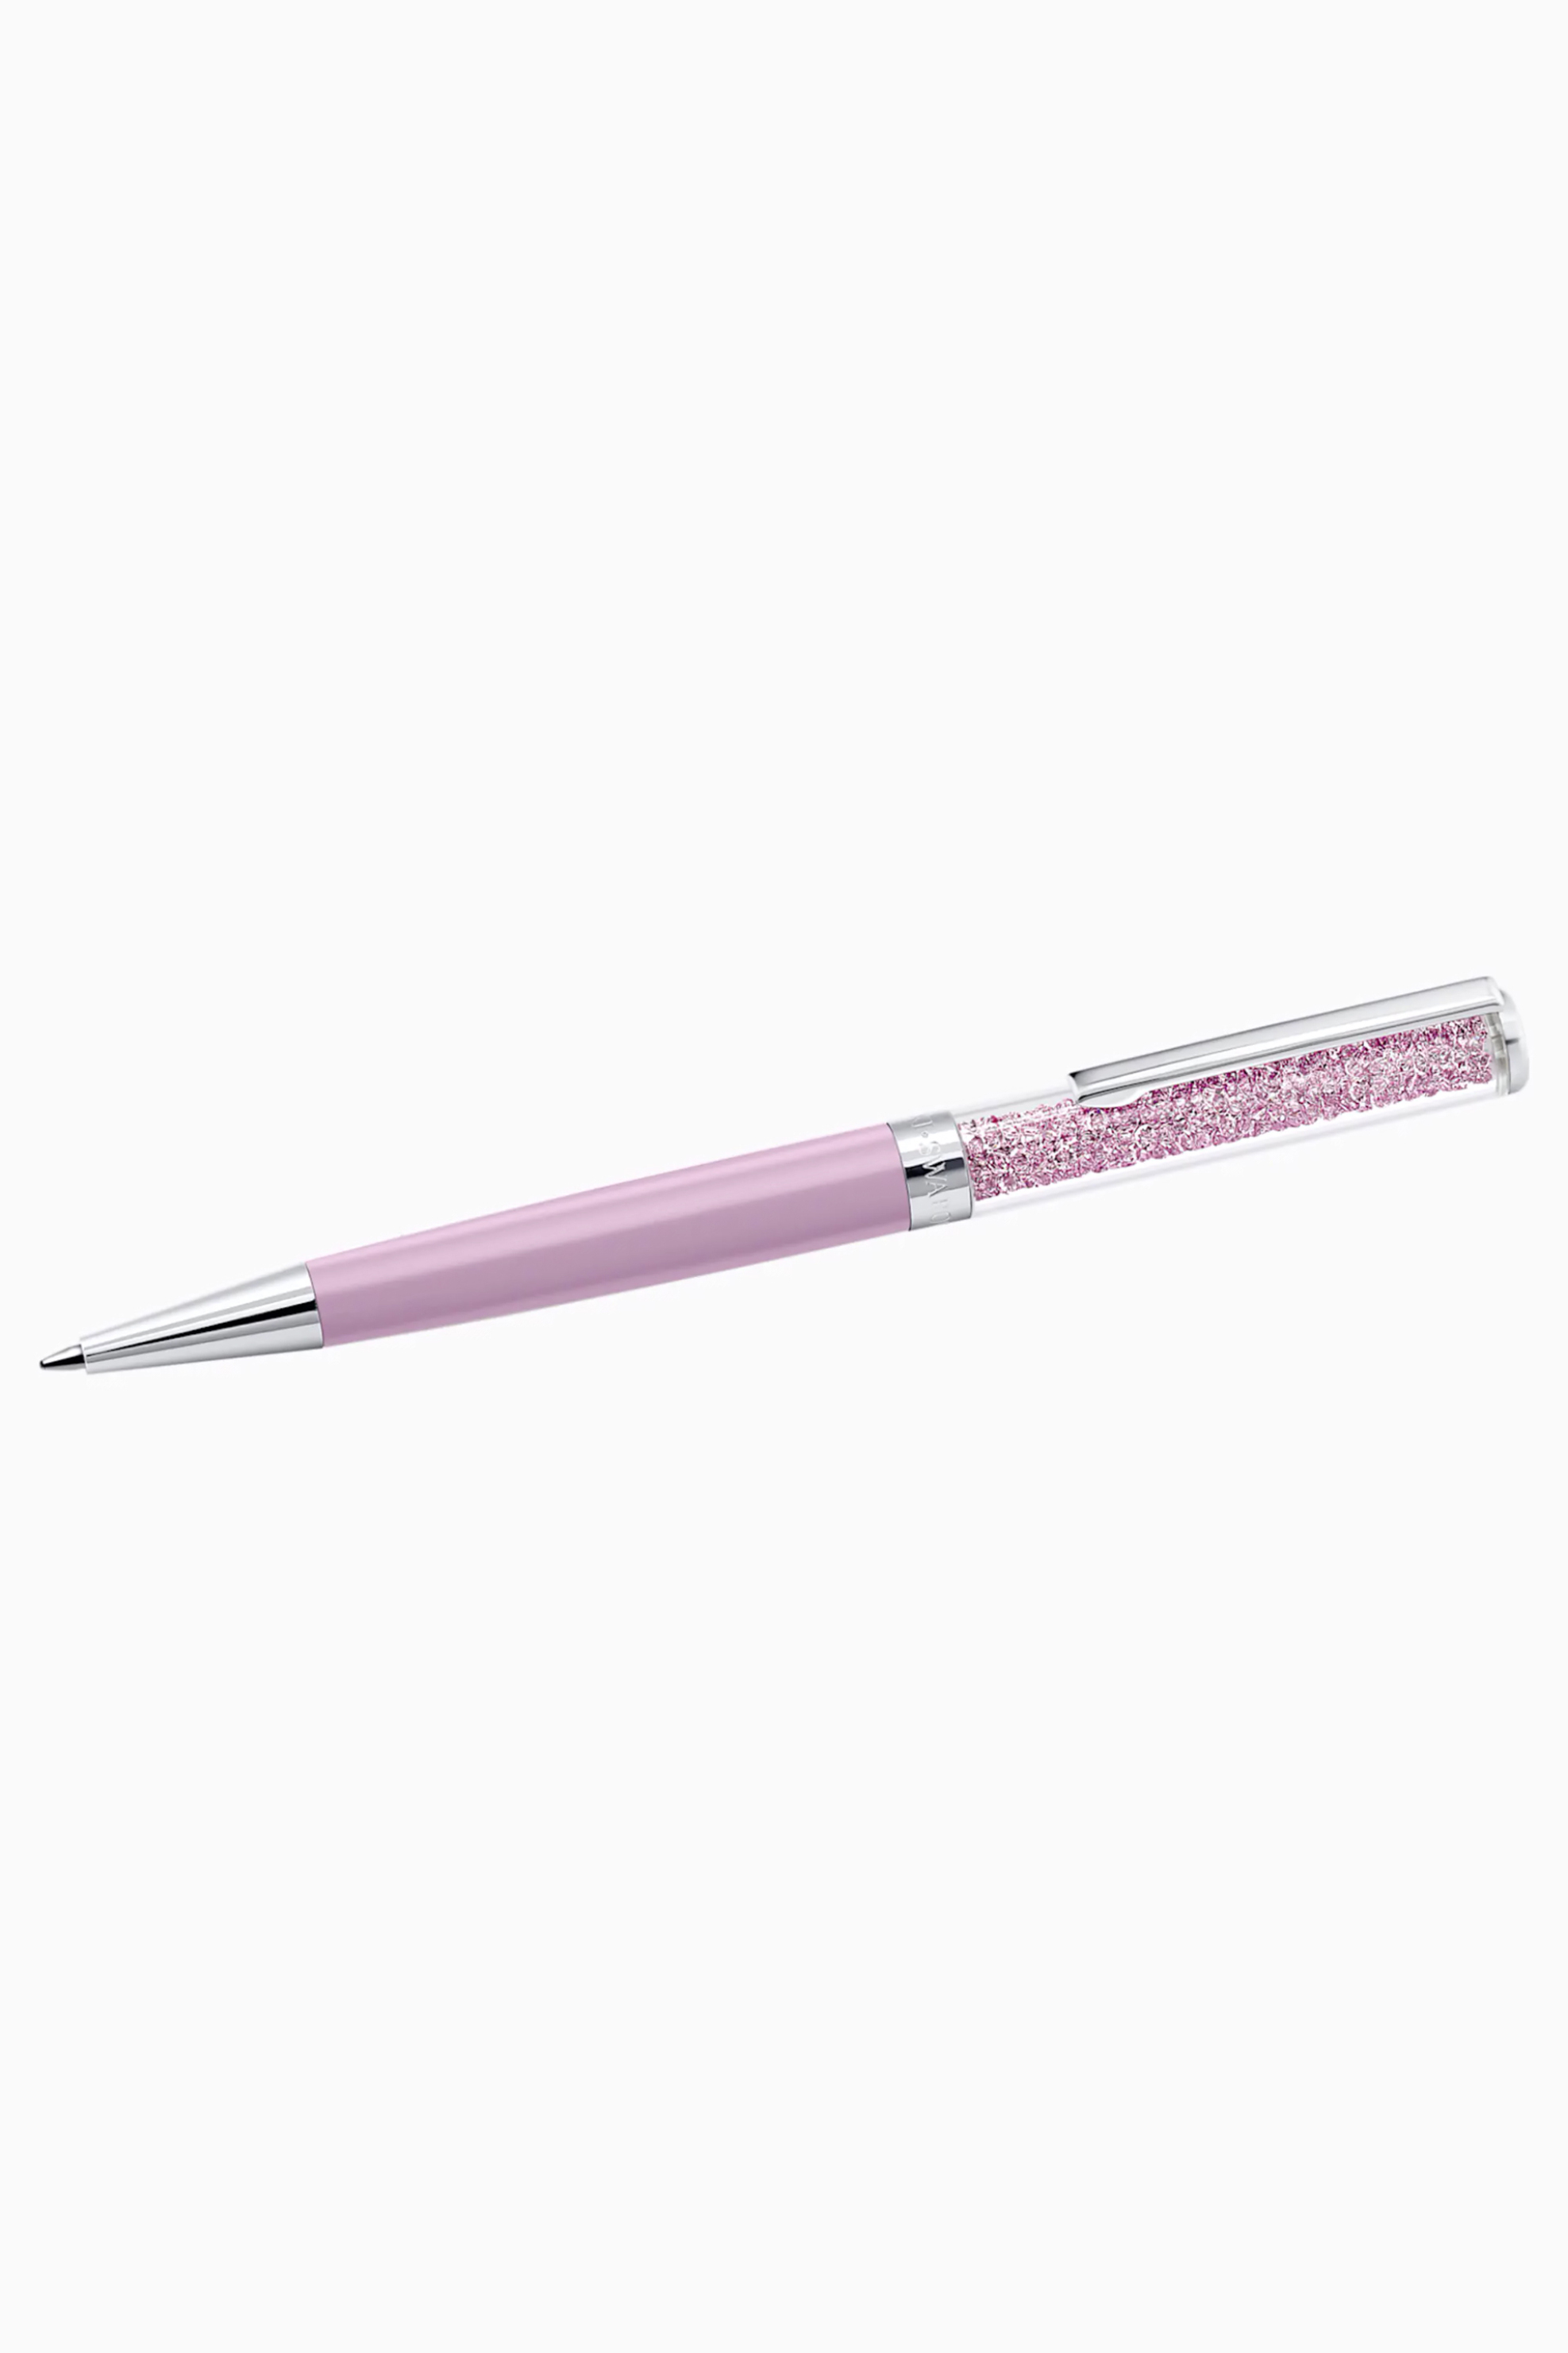 Home > ΔΙΑΚΟΣΜΗΣΗ > Γραφείο > Γραφική Ύλη > Στυλό Swarovski Crystalline Ballpoint Pen, Light Lilac - 5224388